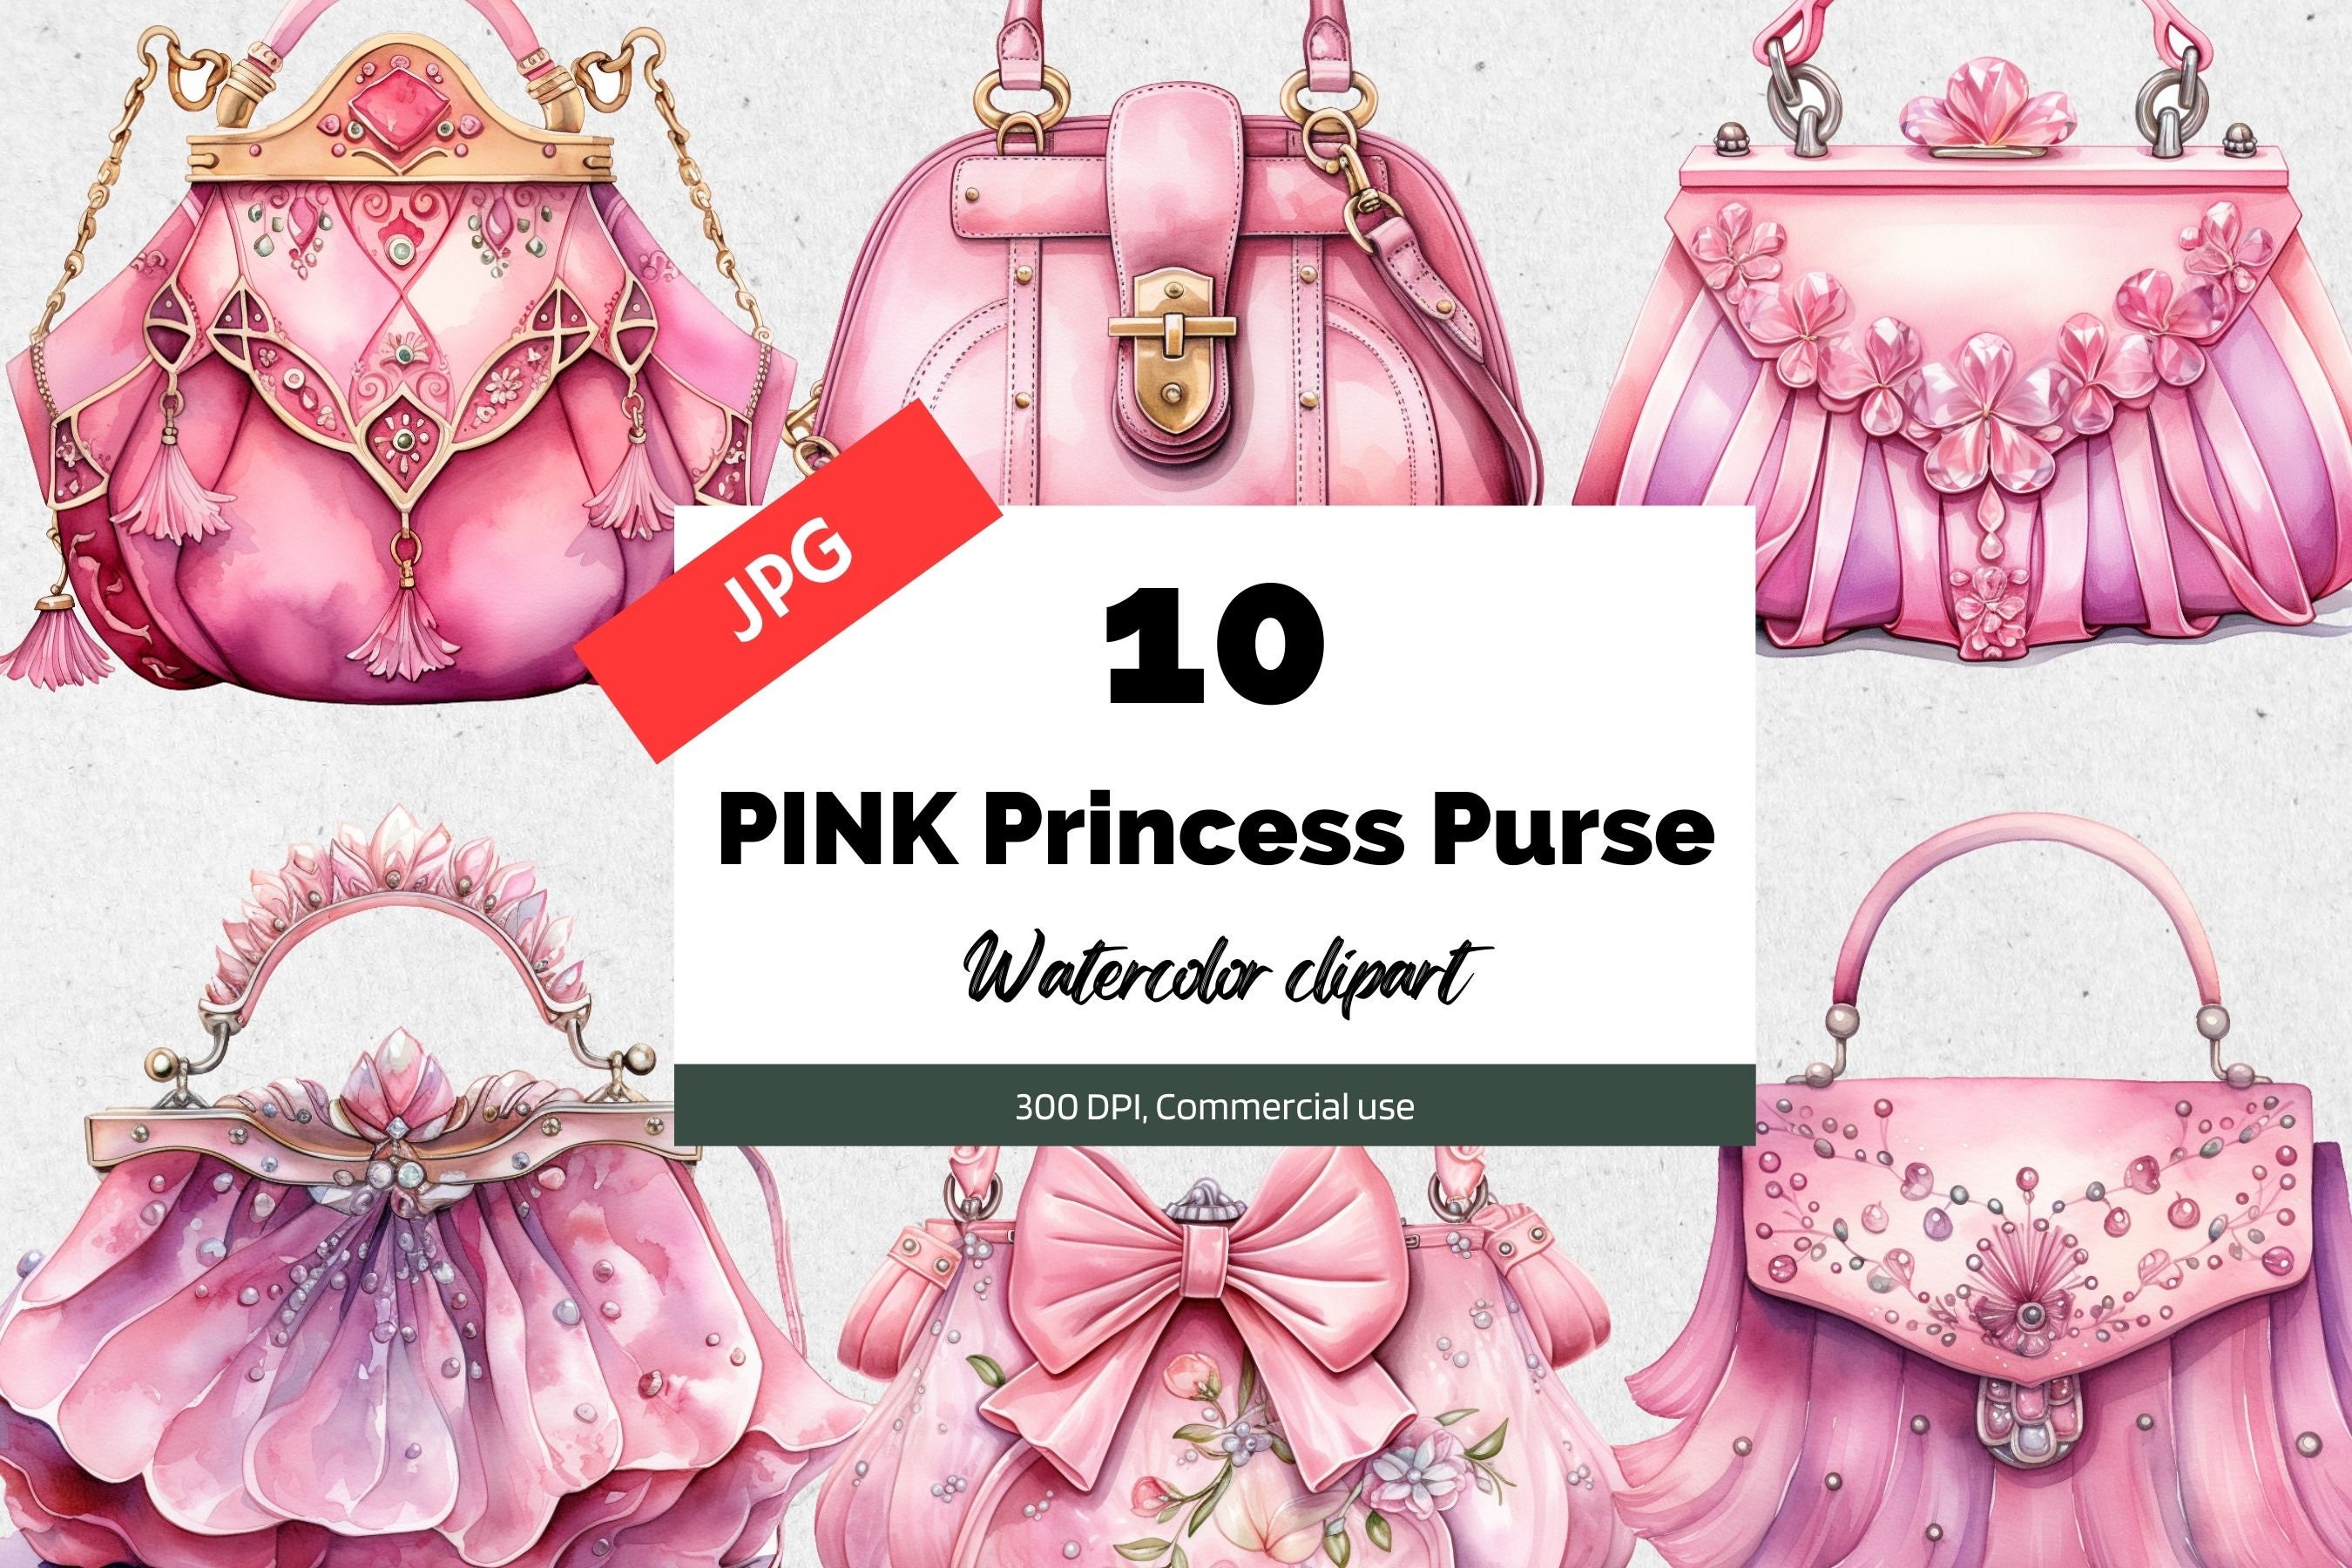 Disney Purse Ornament - Princess Aurora from Sleeping Beauty